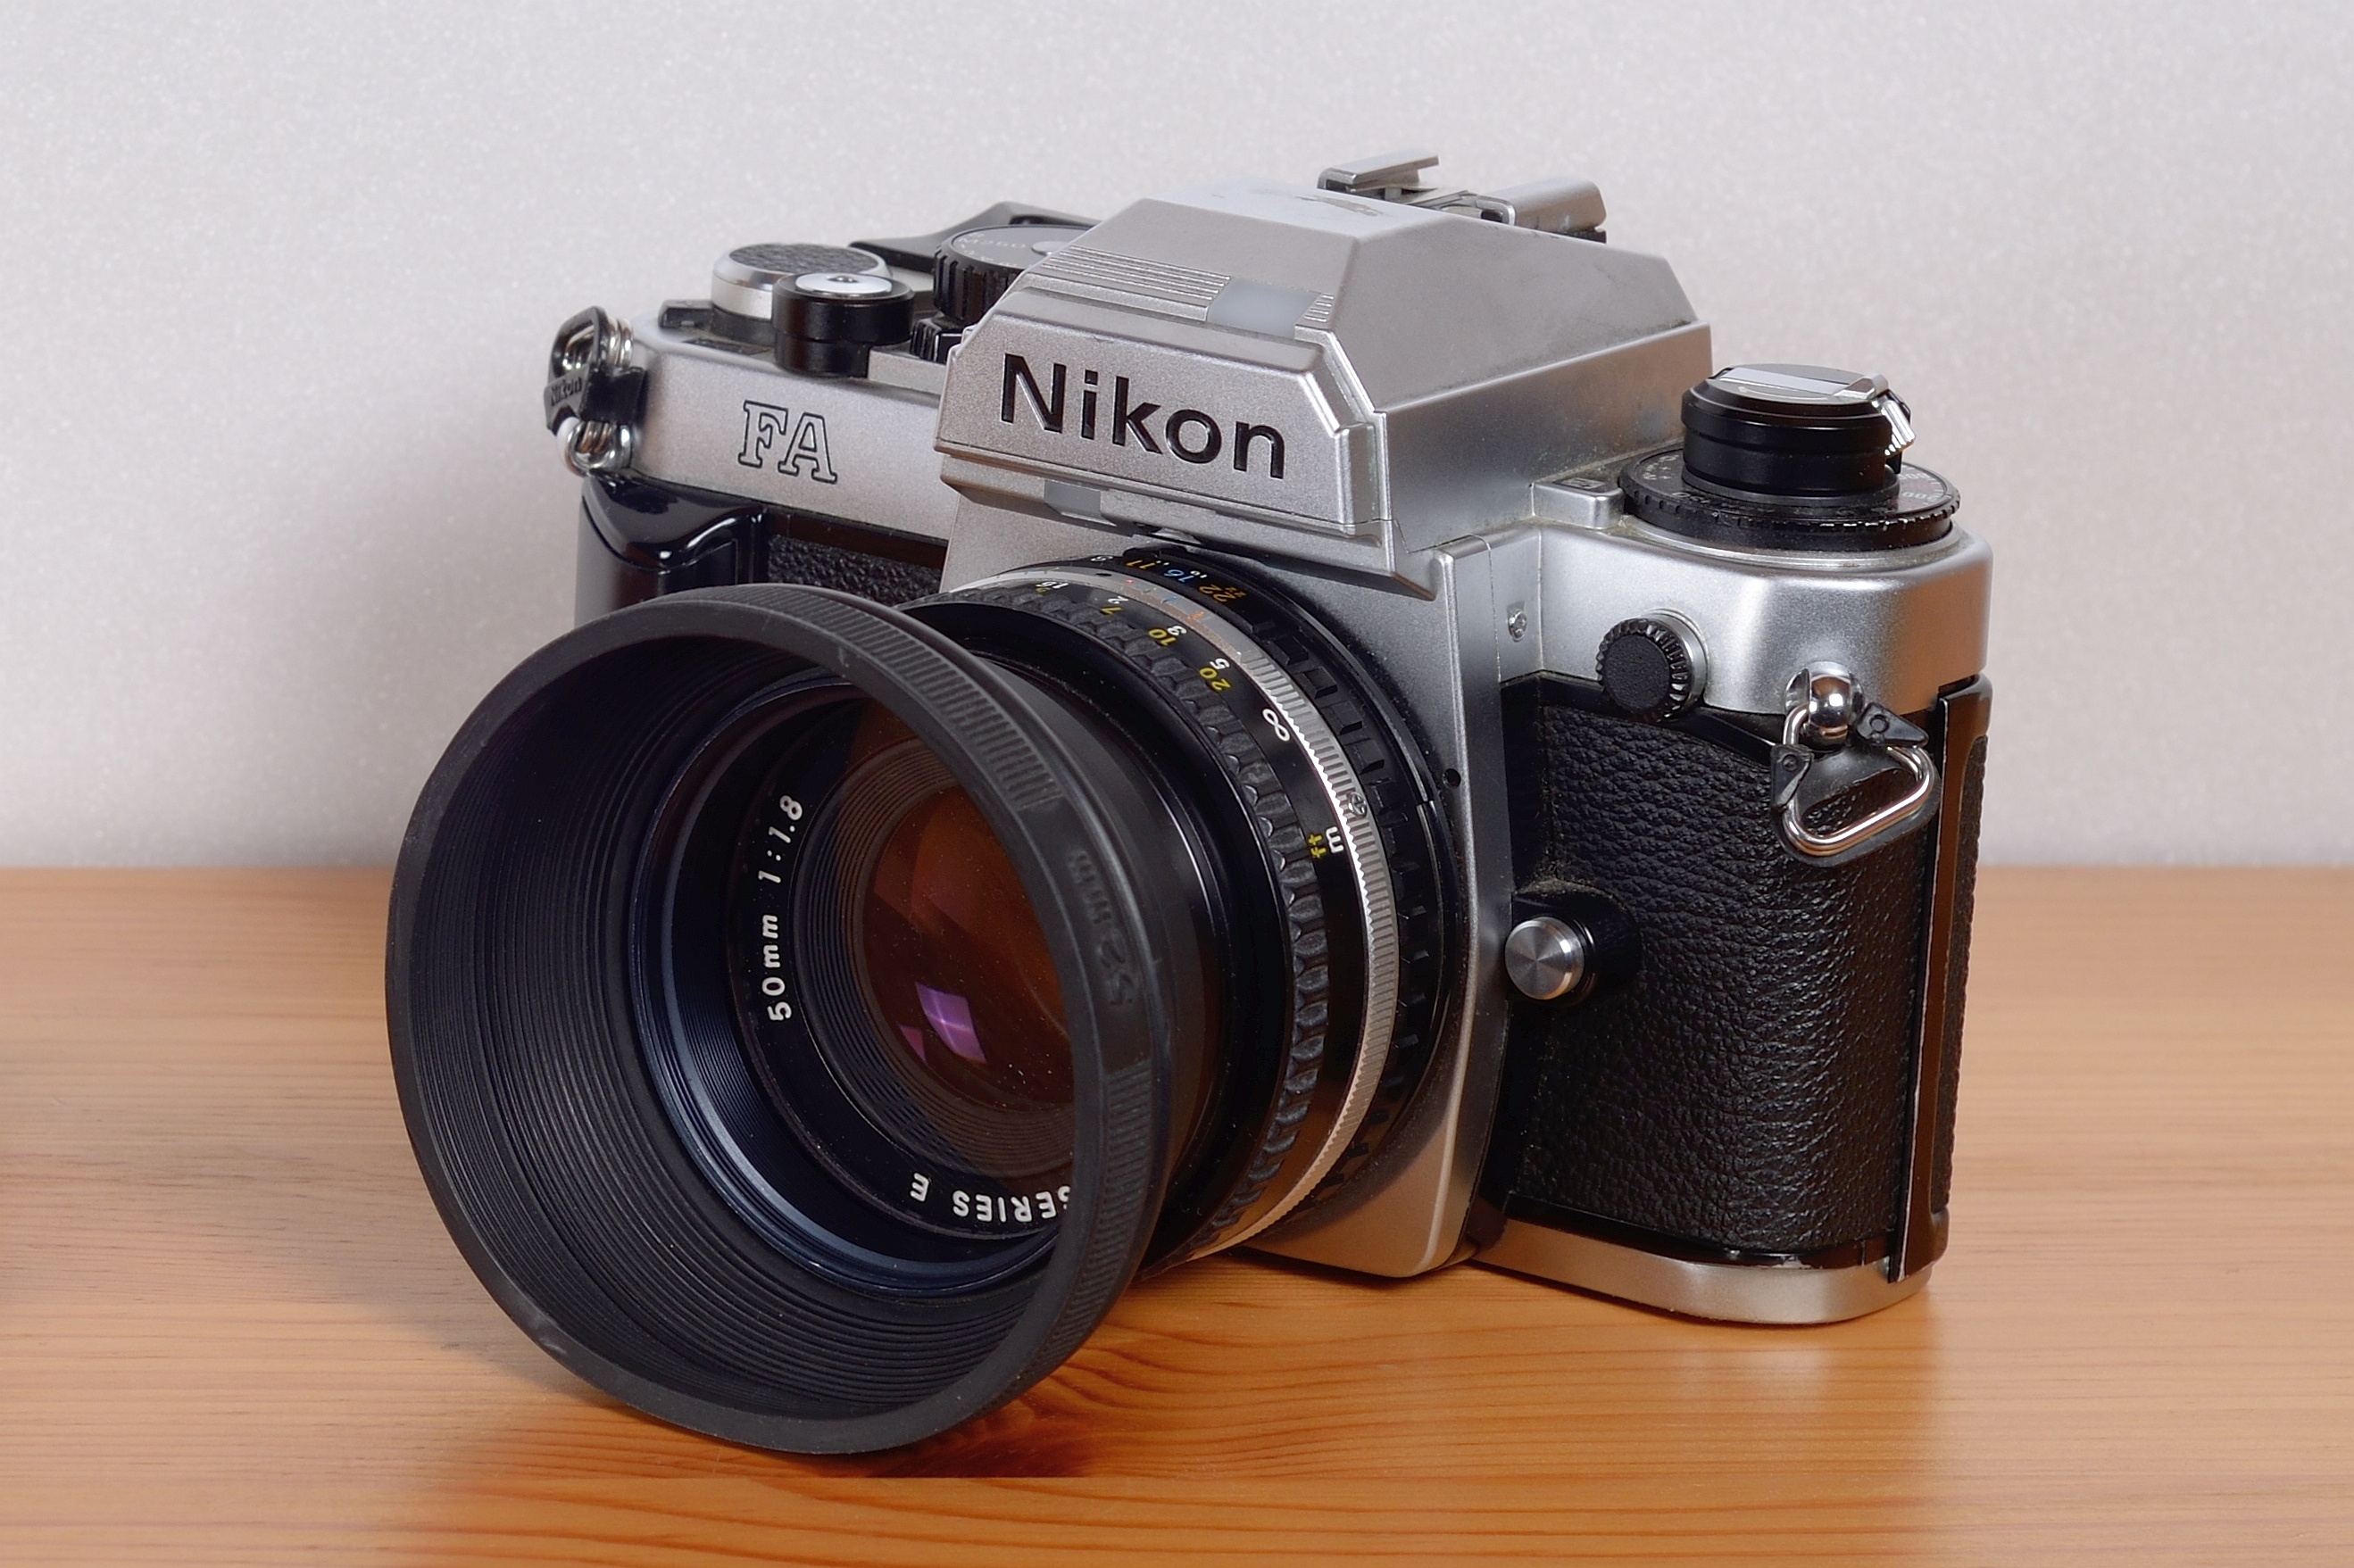 Nikon FA-DSC 4067w